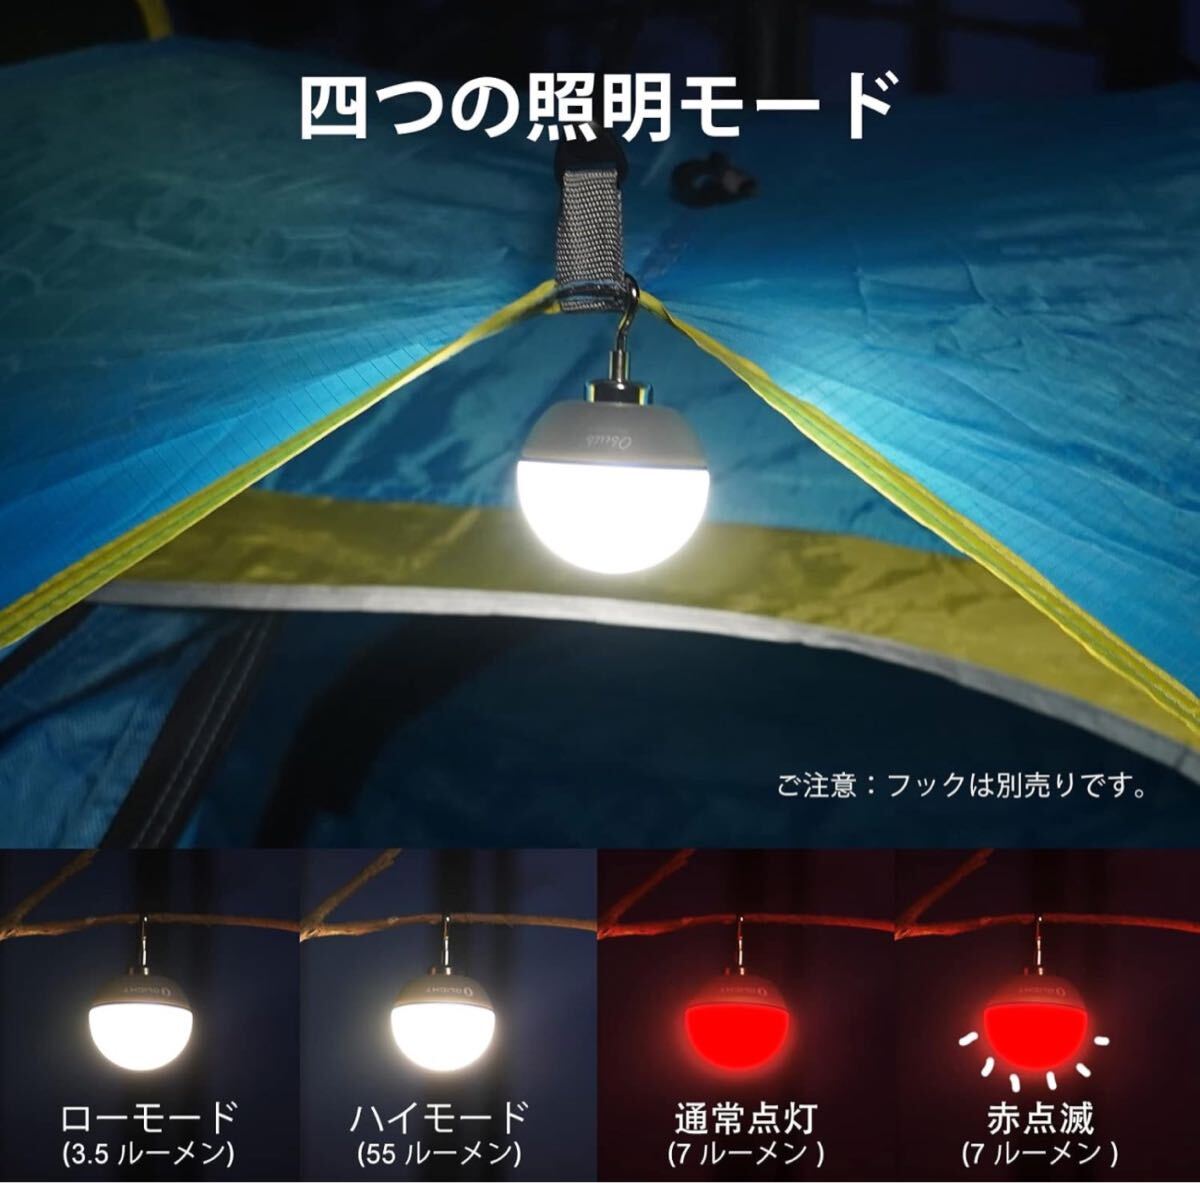 OLIGHT(オーライト) Obulb ナイトライト 小型 4モード切替 56時間使用 55ルーメン ベッドサイドライト 常夜灯 手元ライト 